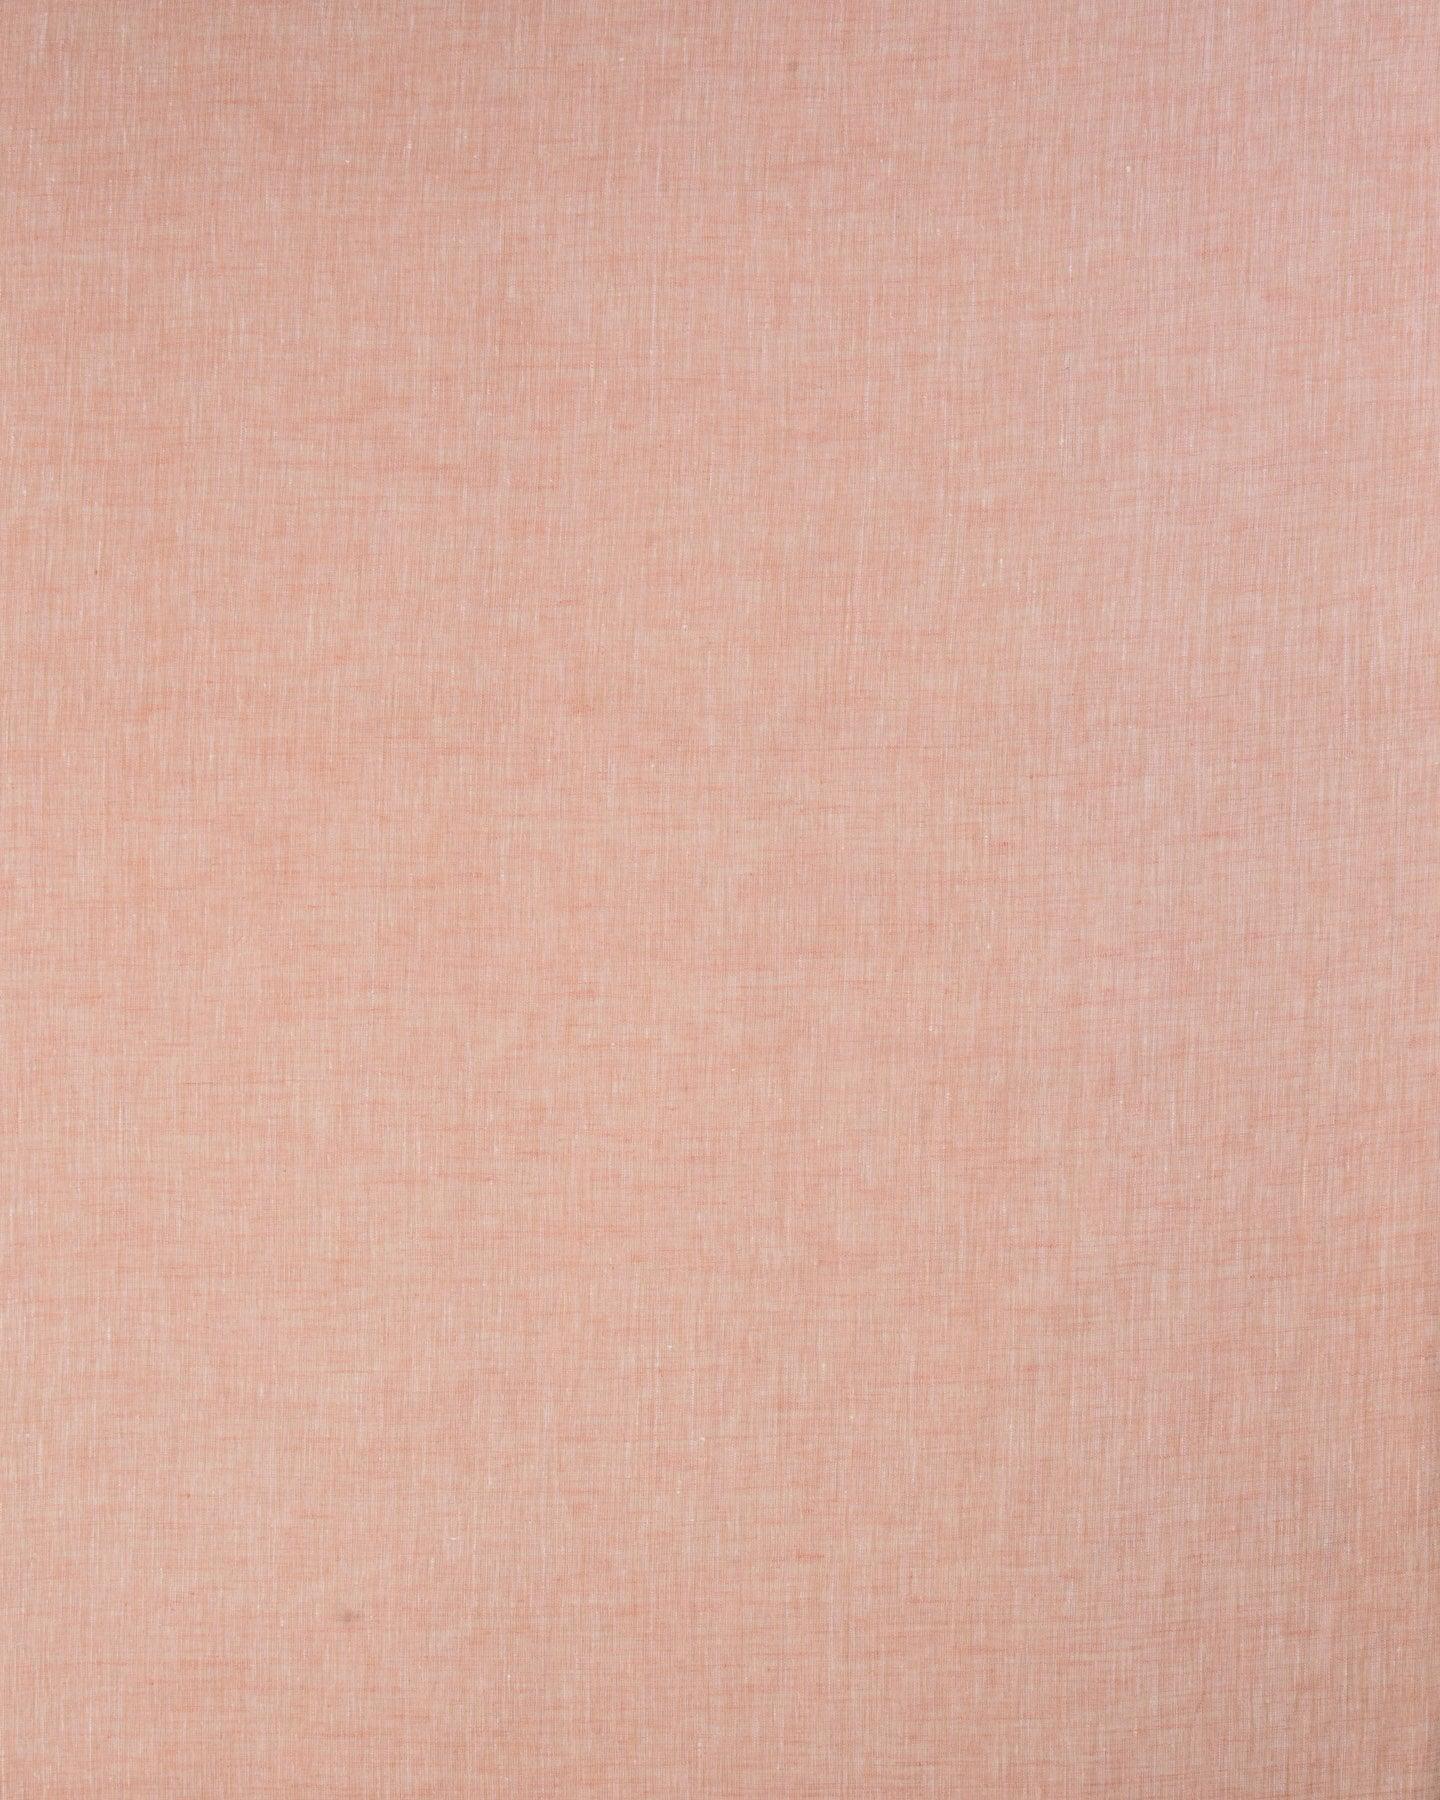 Peach Textured Plain Woven Cotton Linen Fabric - By HolyWeaves, Benares